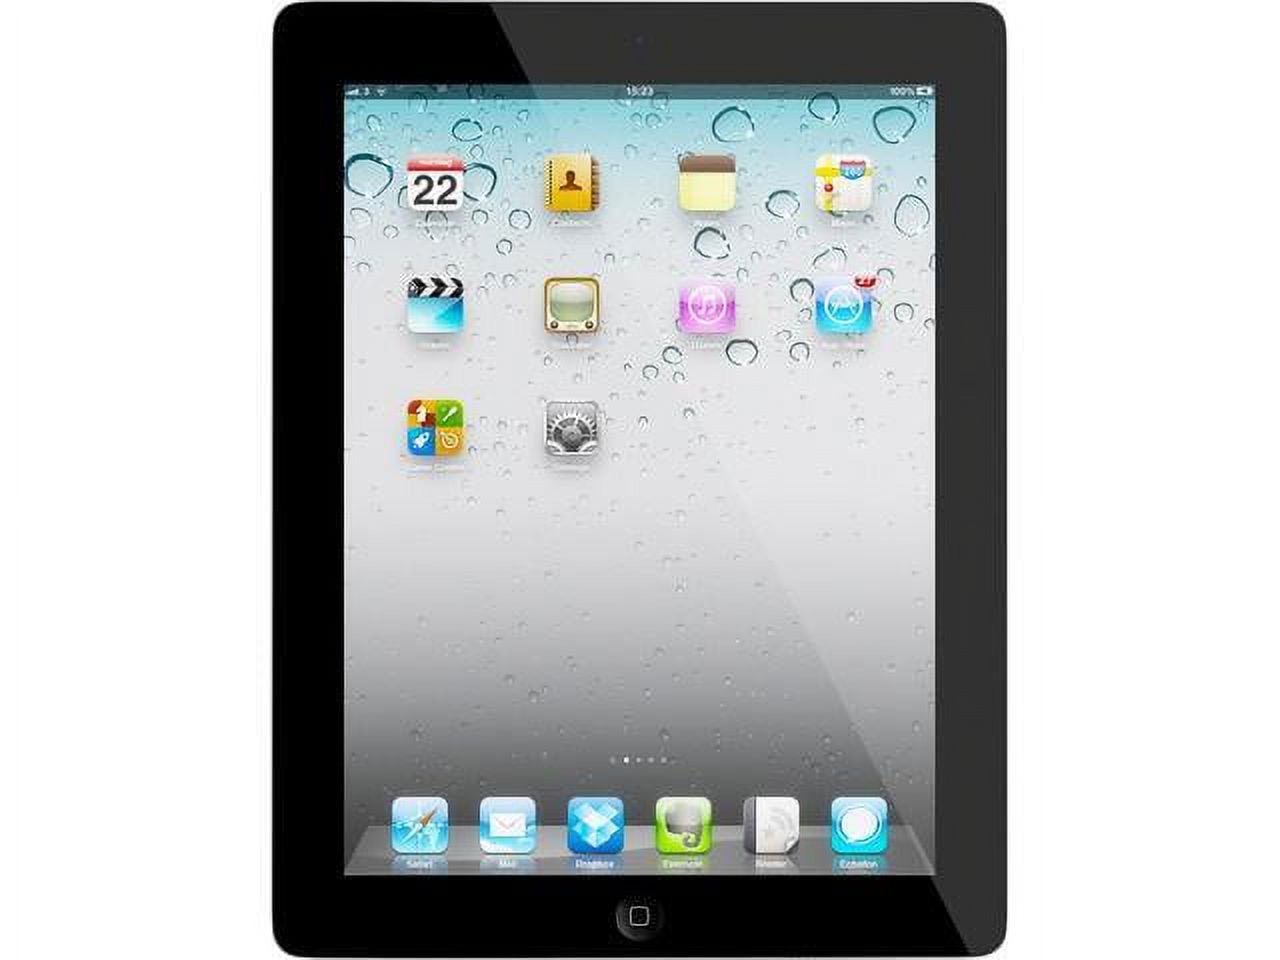 Apple MC954LL/A iPad 2 16GB with Wi-Fi - Black (Used ) - image 1 of 4